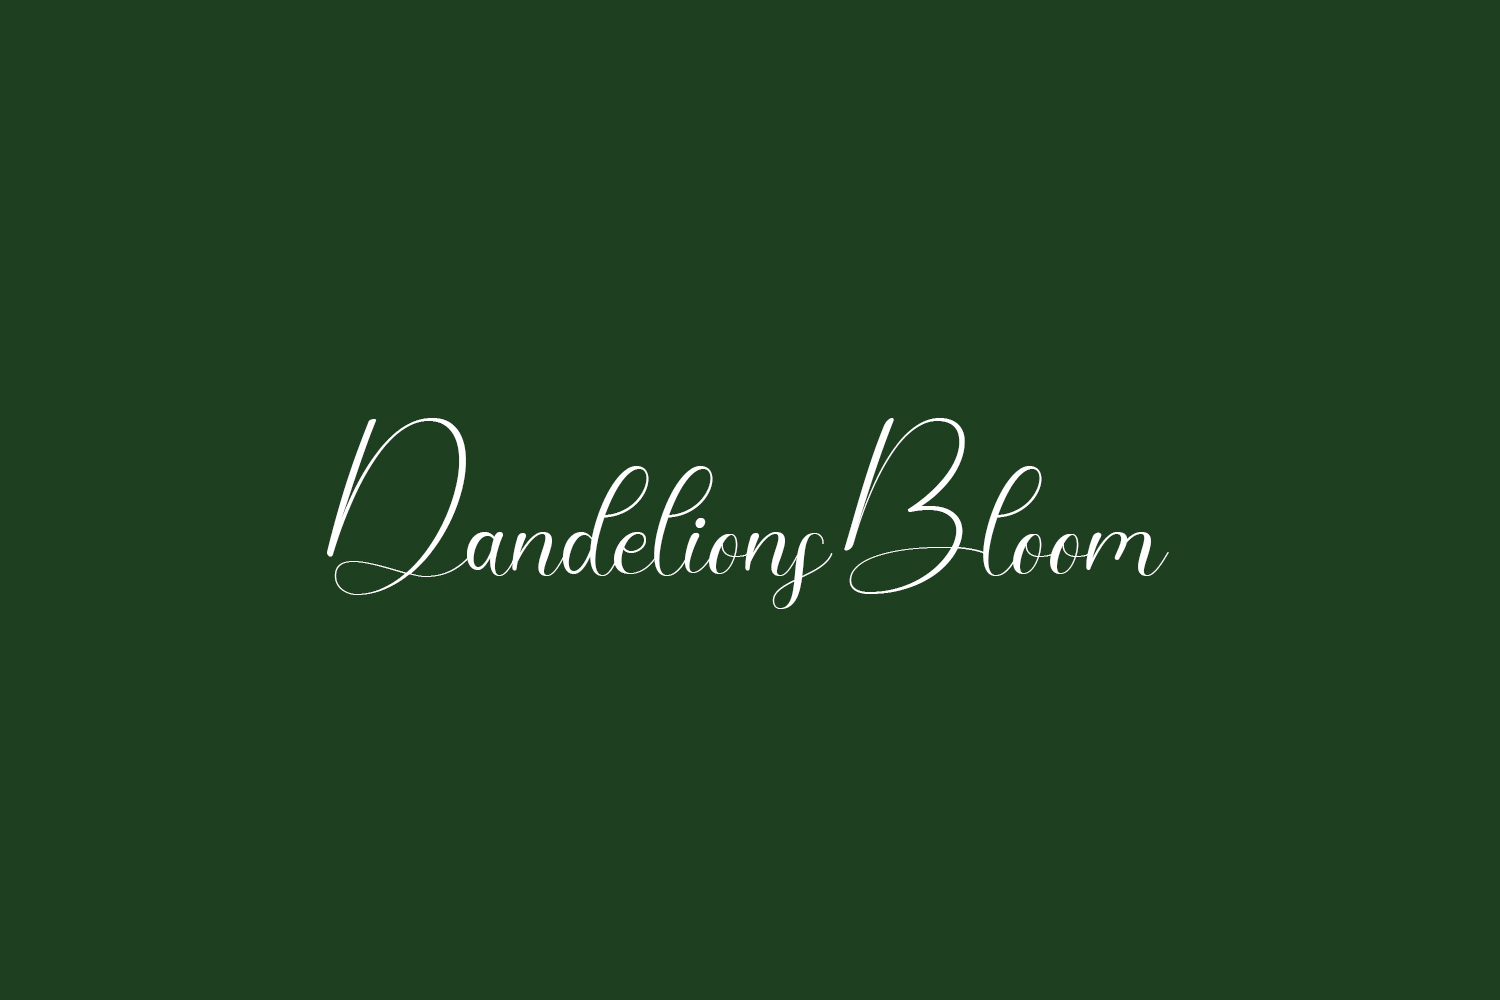 Dandelions Bloom Free Font